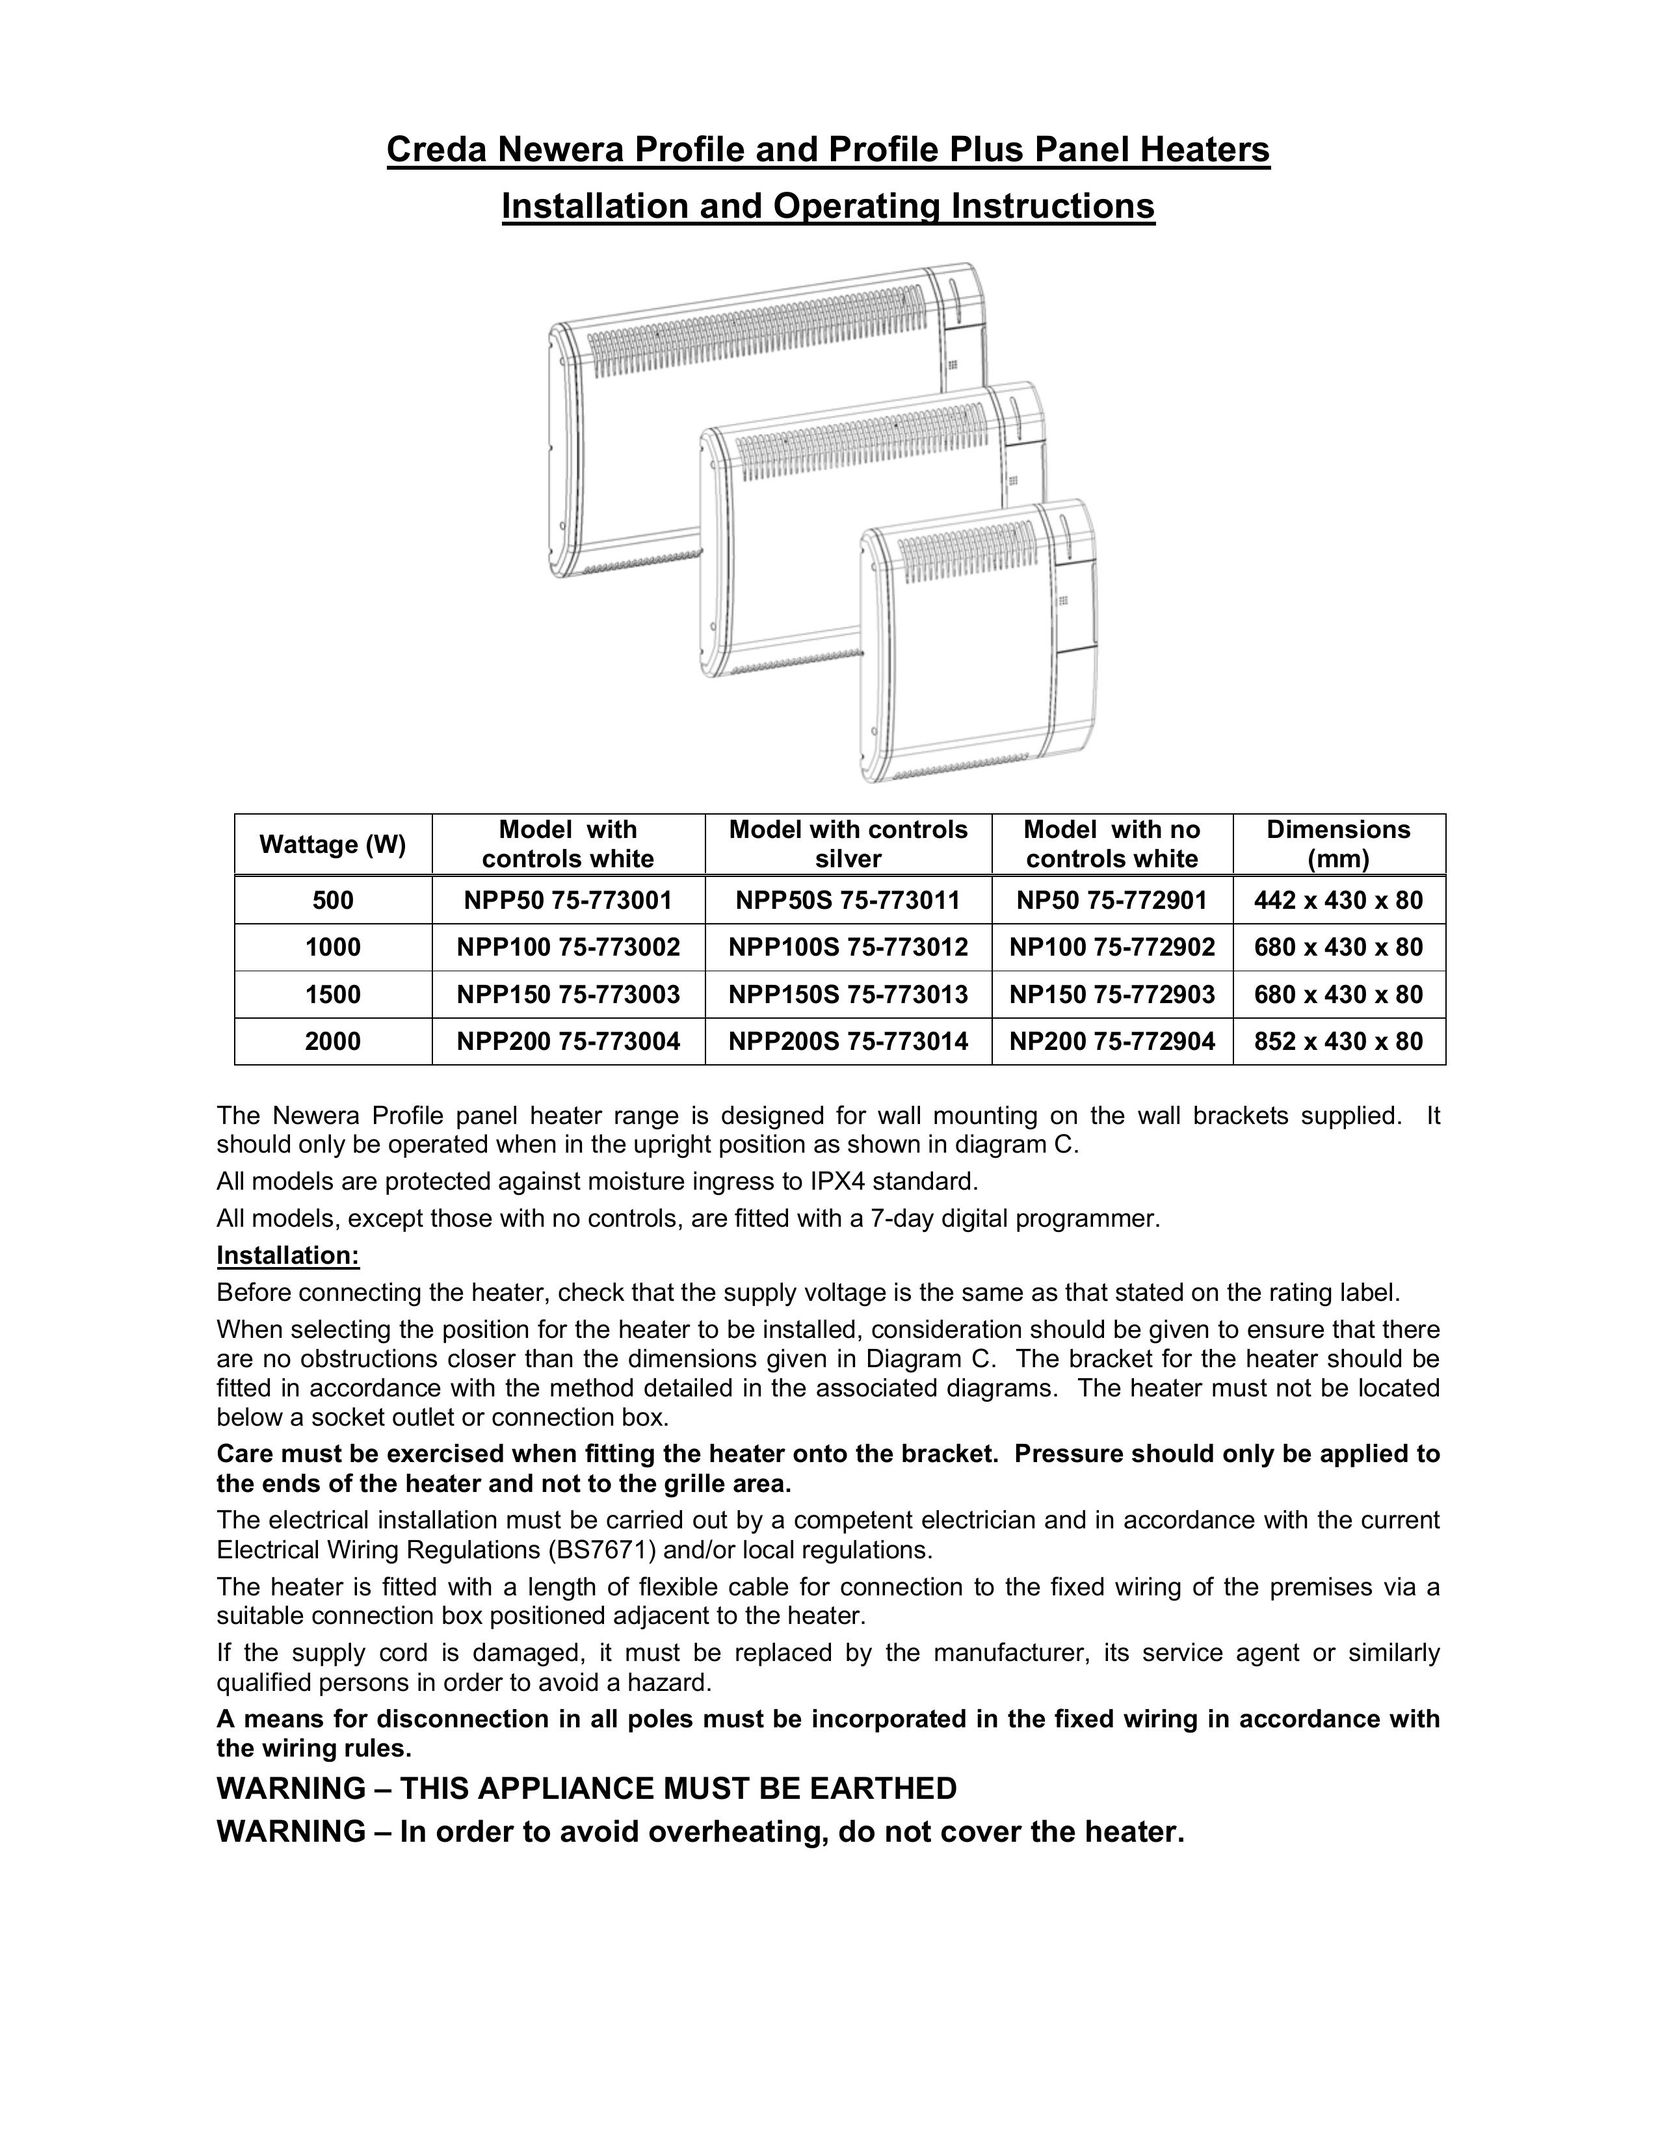 Creda NP100 75-772902 Air Conditioner User Manual